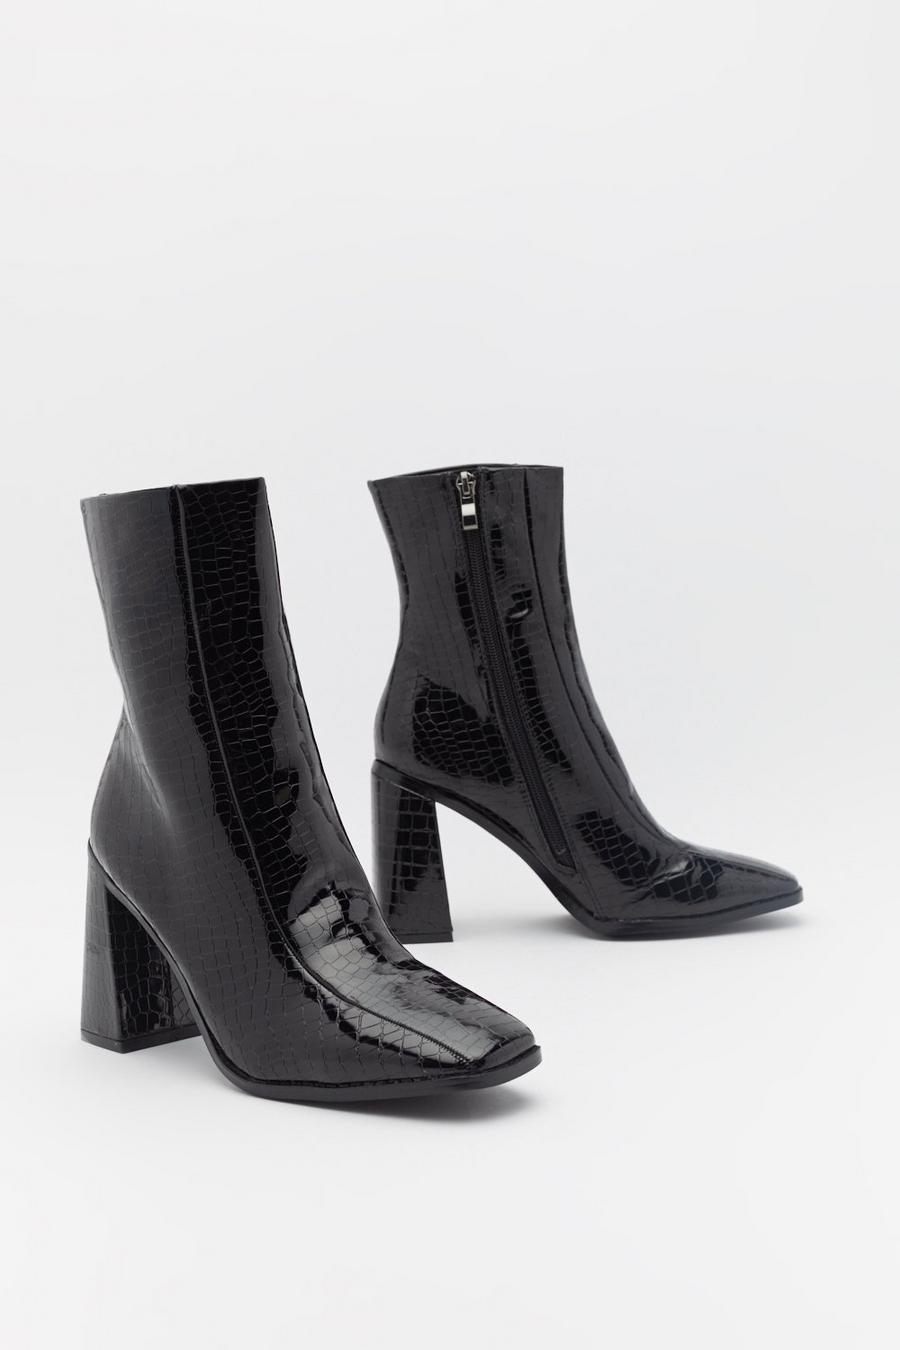 Croc Square Toe Flare Heel Boots